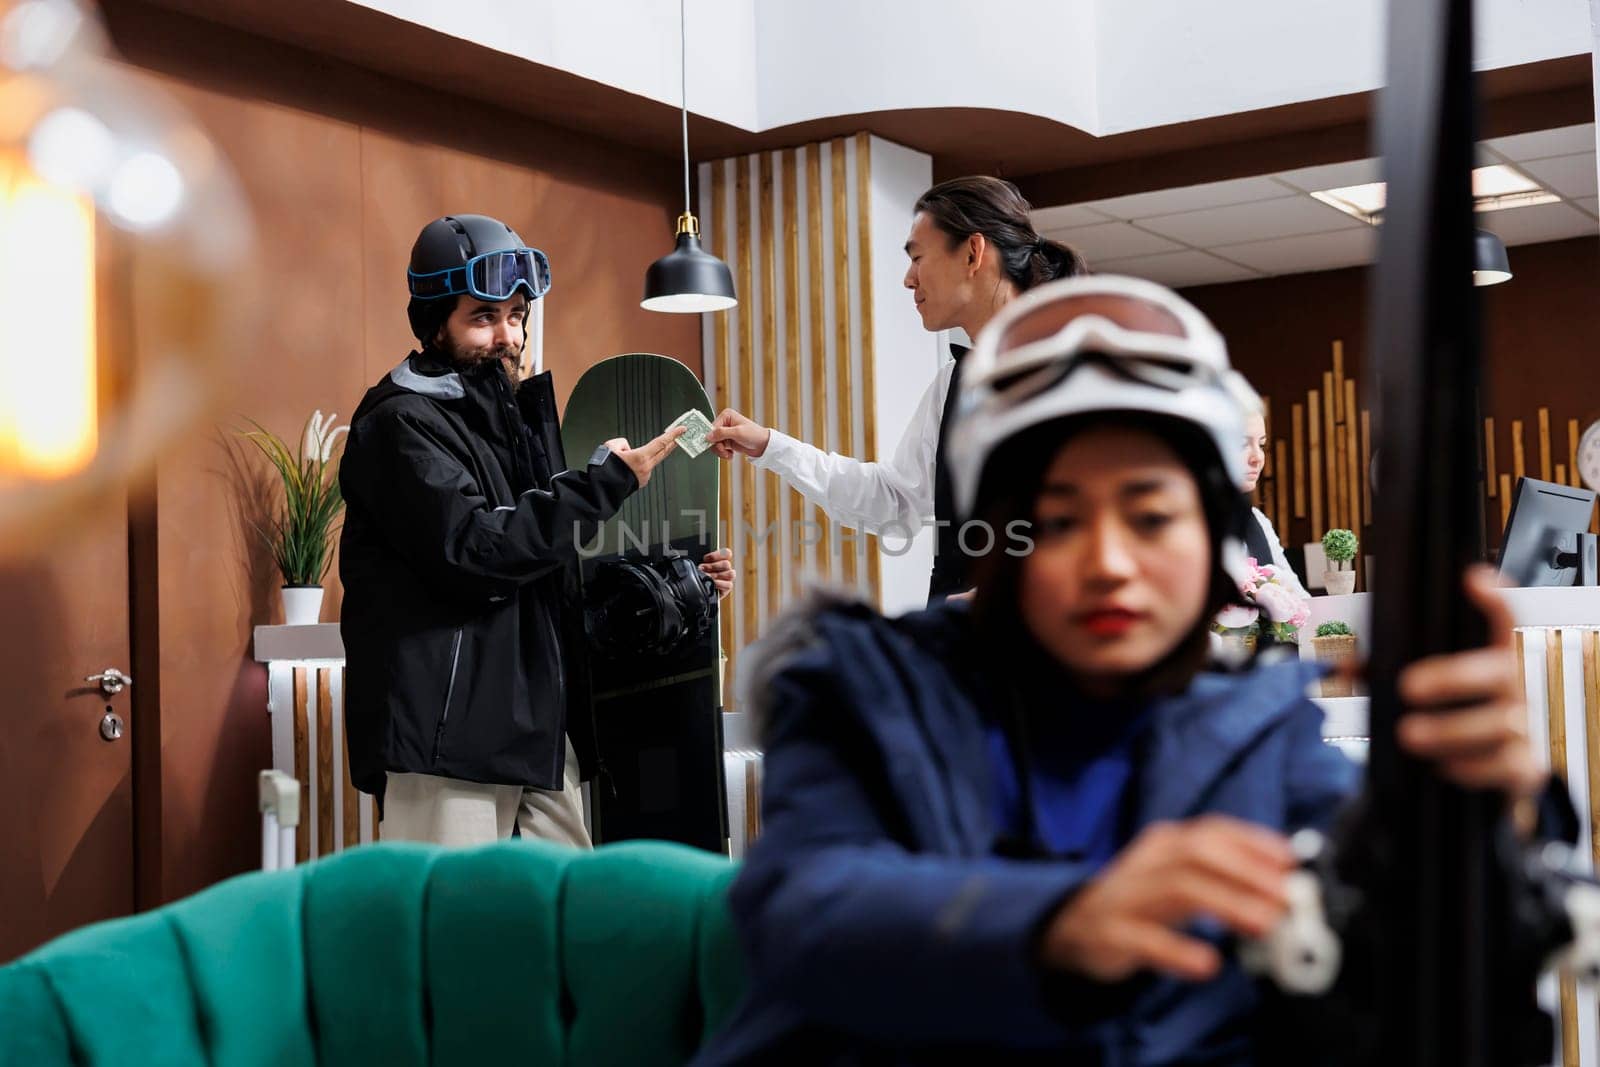 Man in winter gear tipping hotel staff by DCStudio